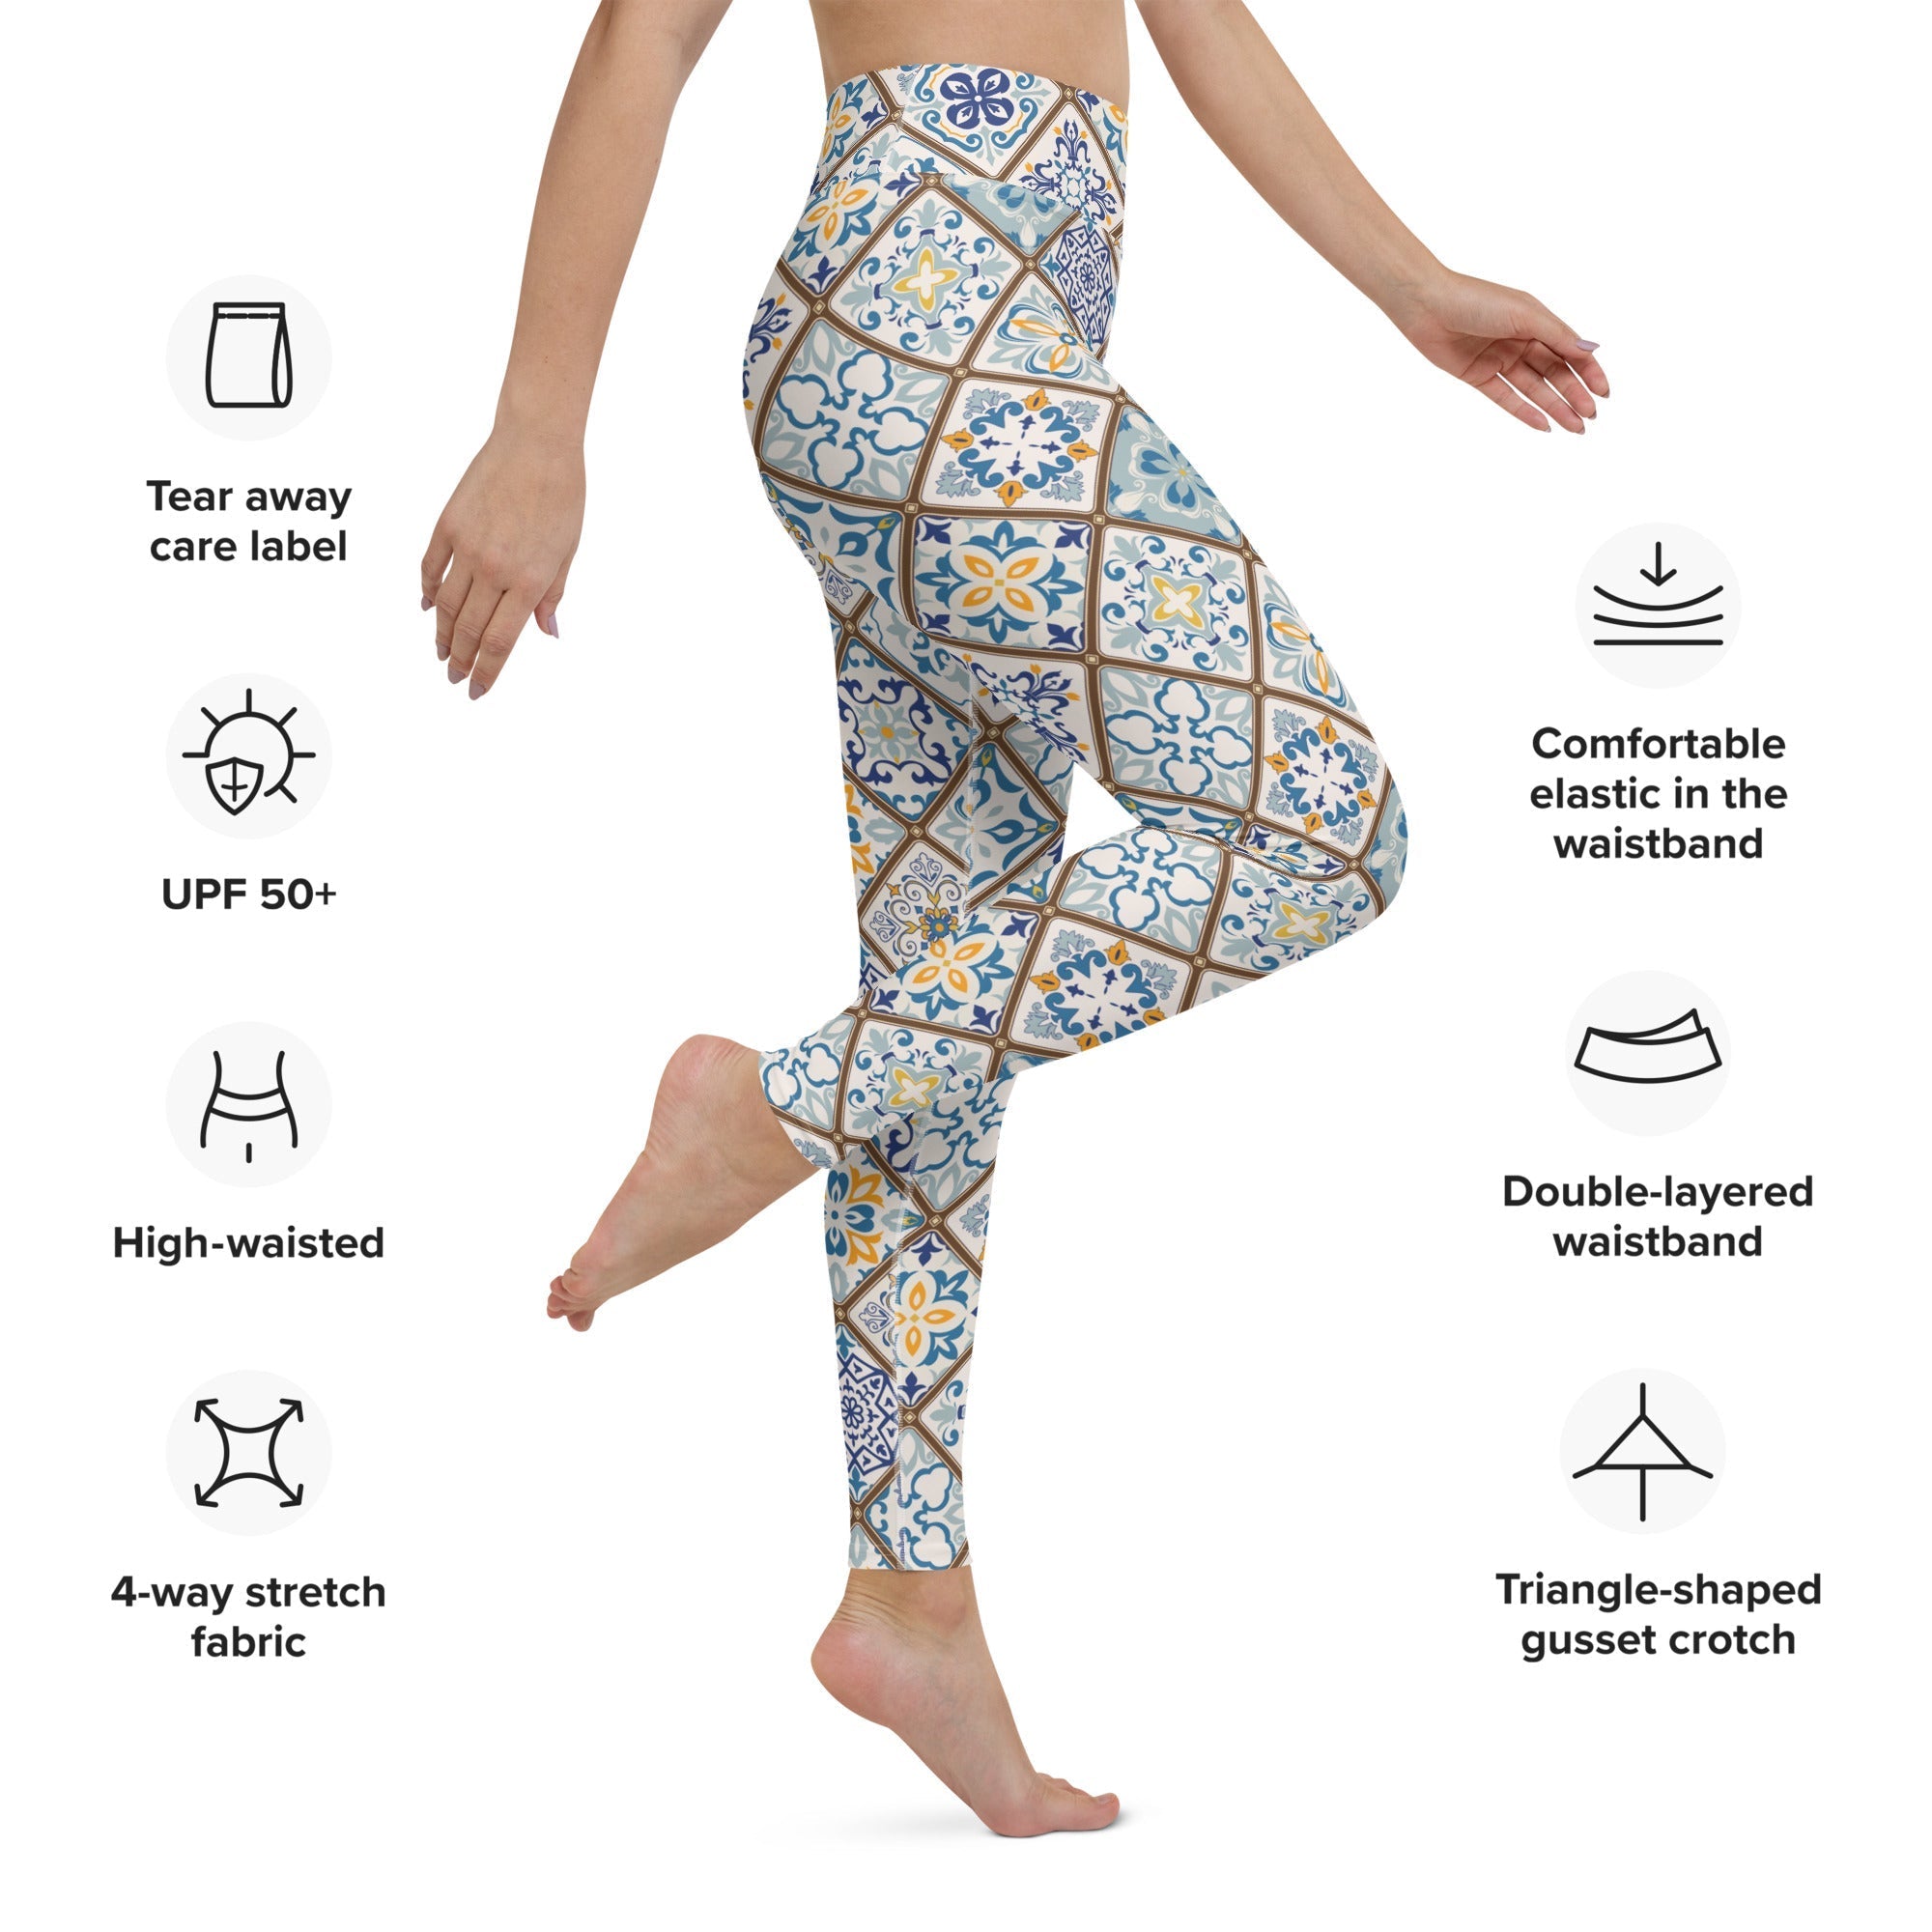 Floral Tile Print Yoga Leggings